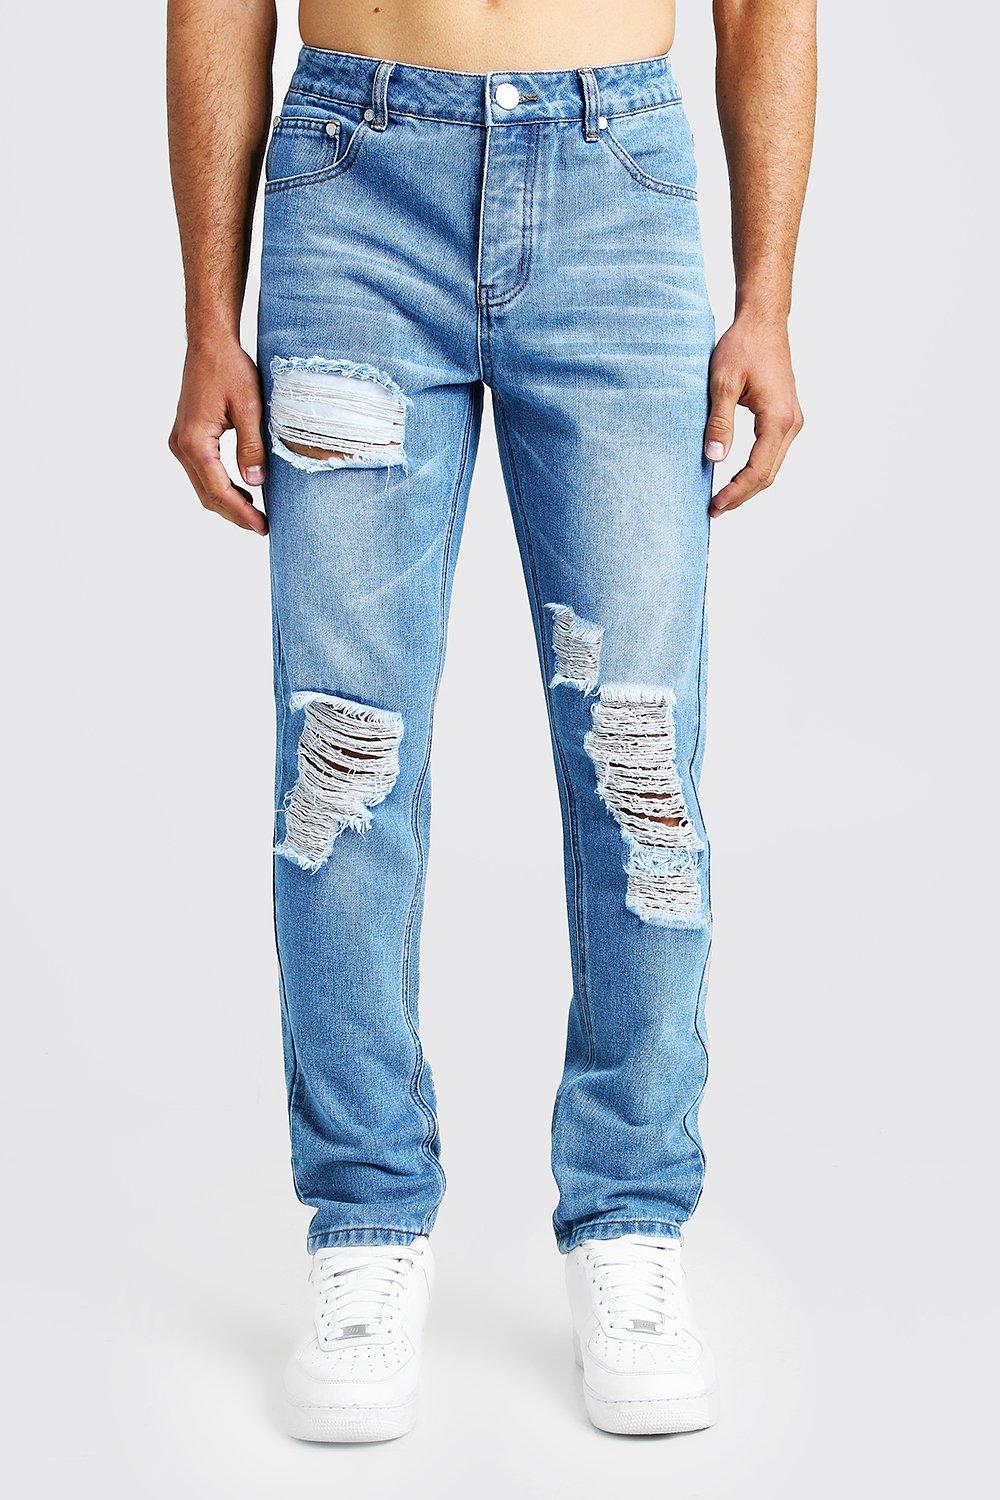 ripped denim jeans